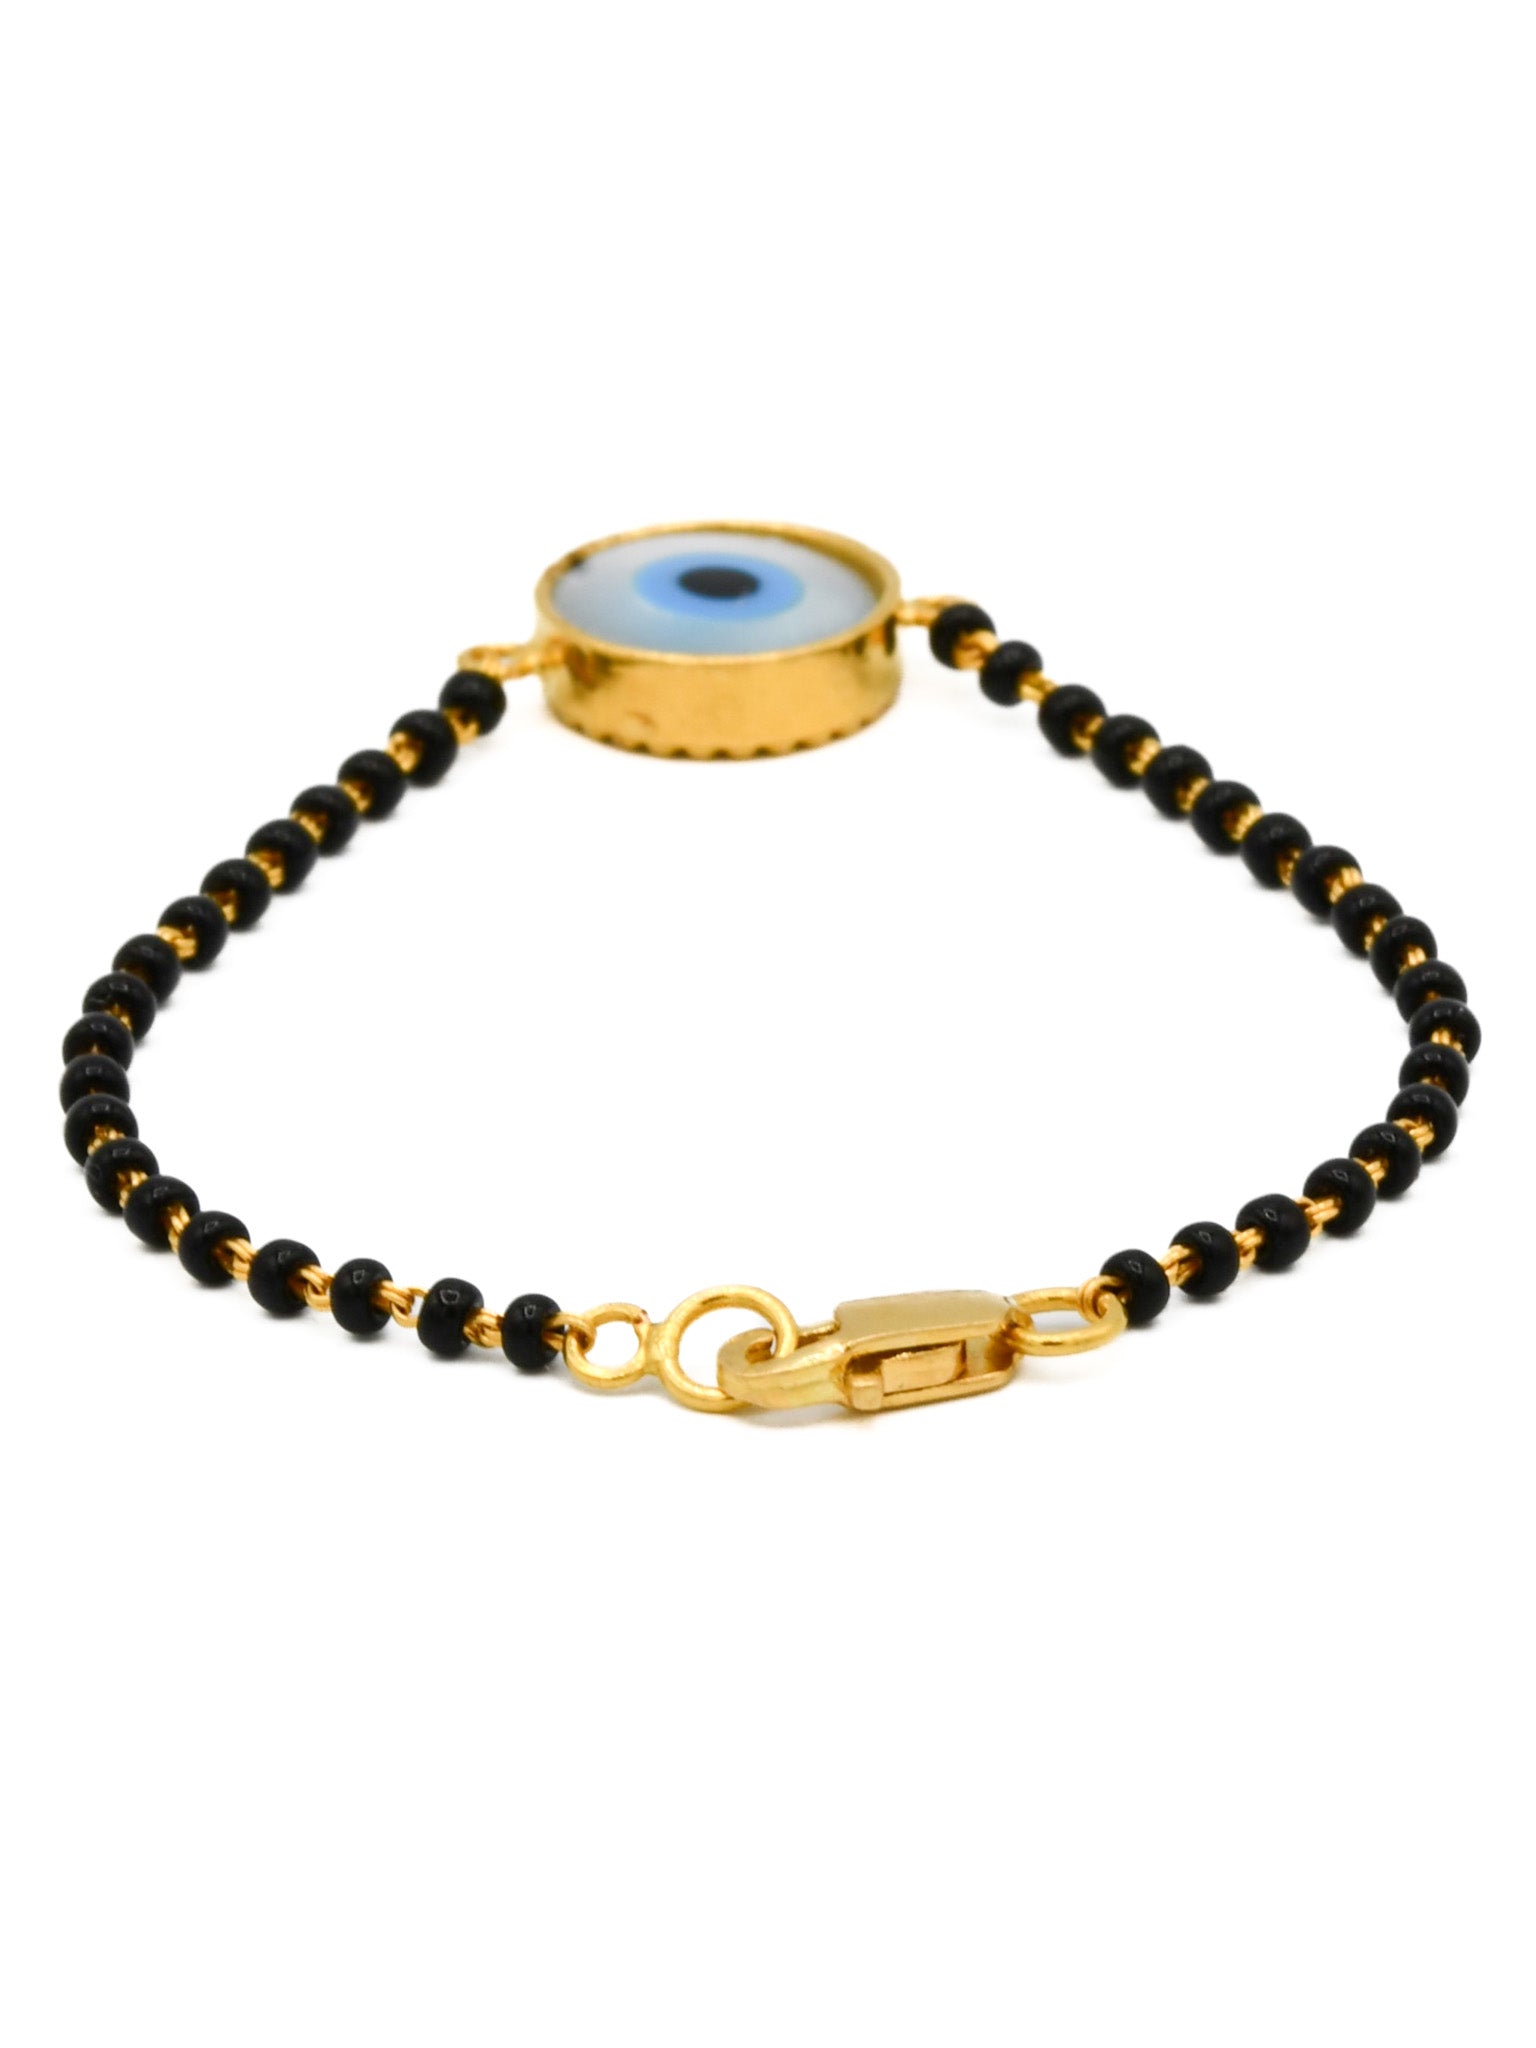 22ct Gold Black Beads Evil Eye Bracelet - Roop Darshan